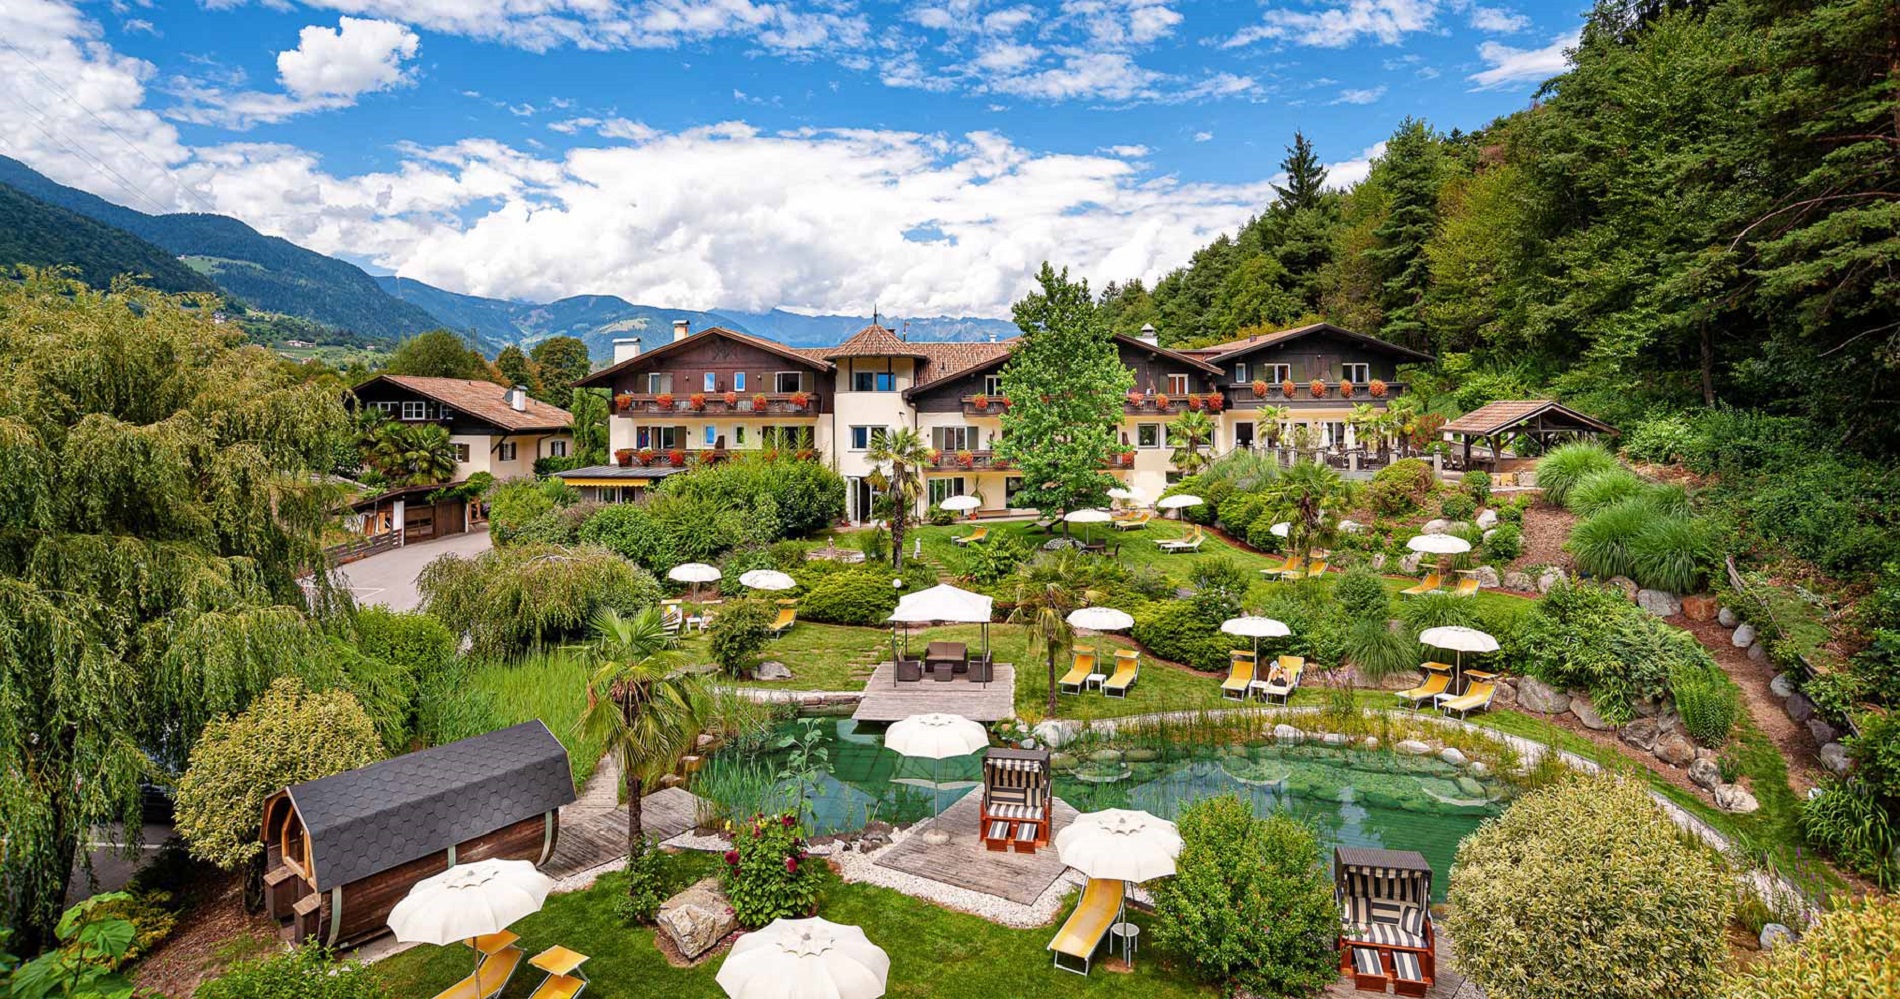  Alpwell Hotel Burggräfler 39010 Tisens - Lana - Meran in Südtirol
